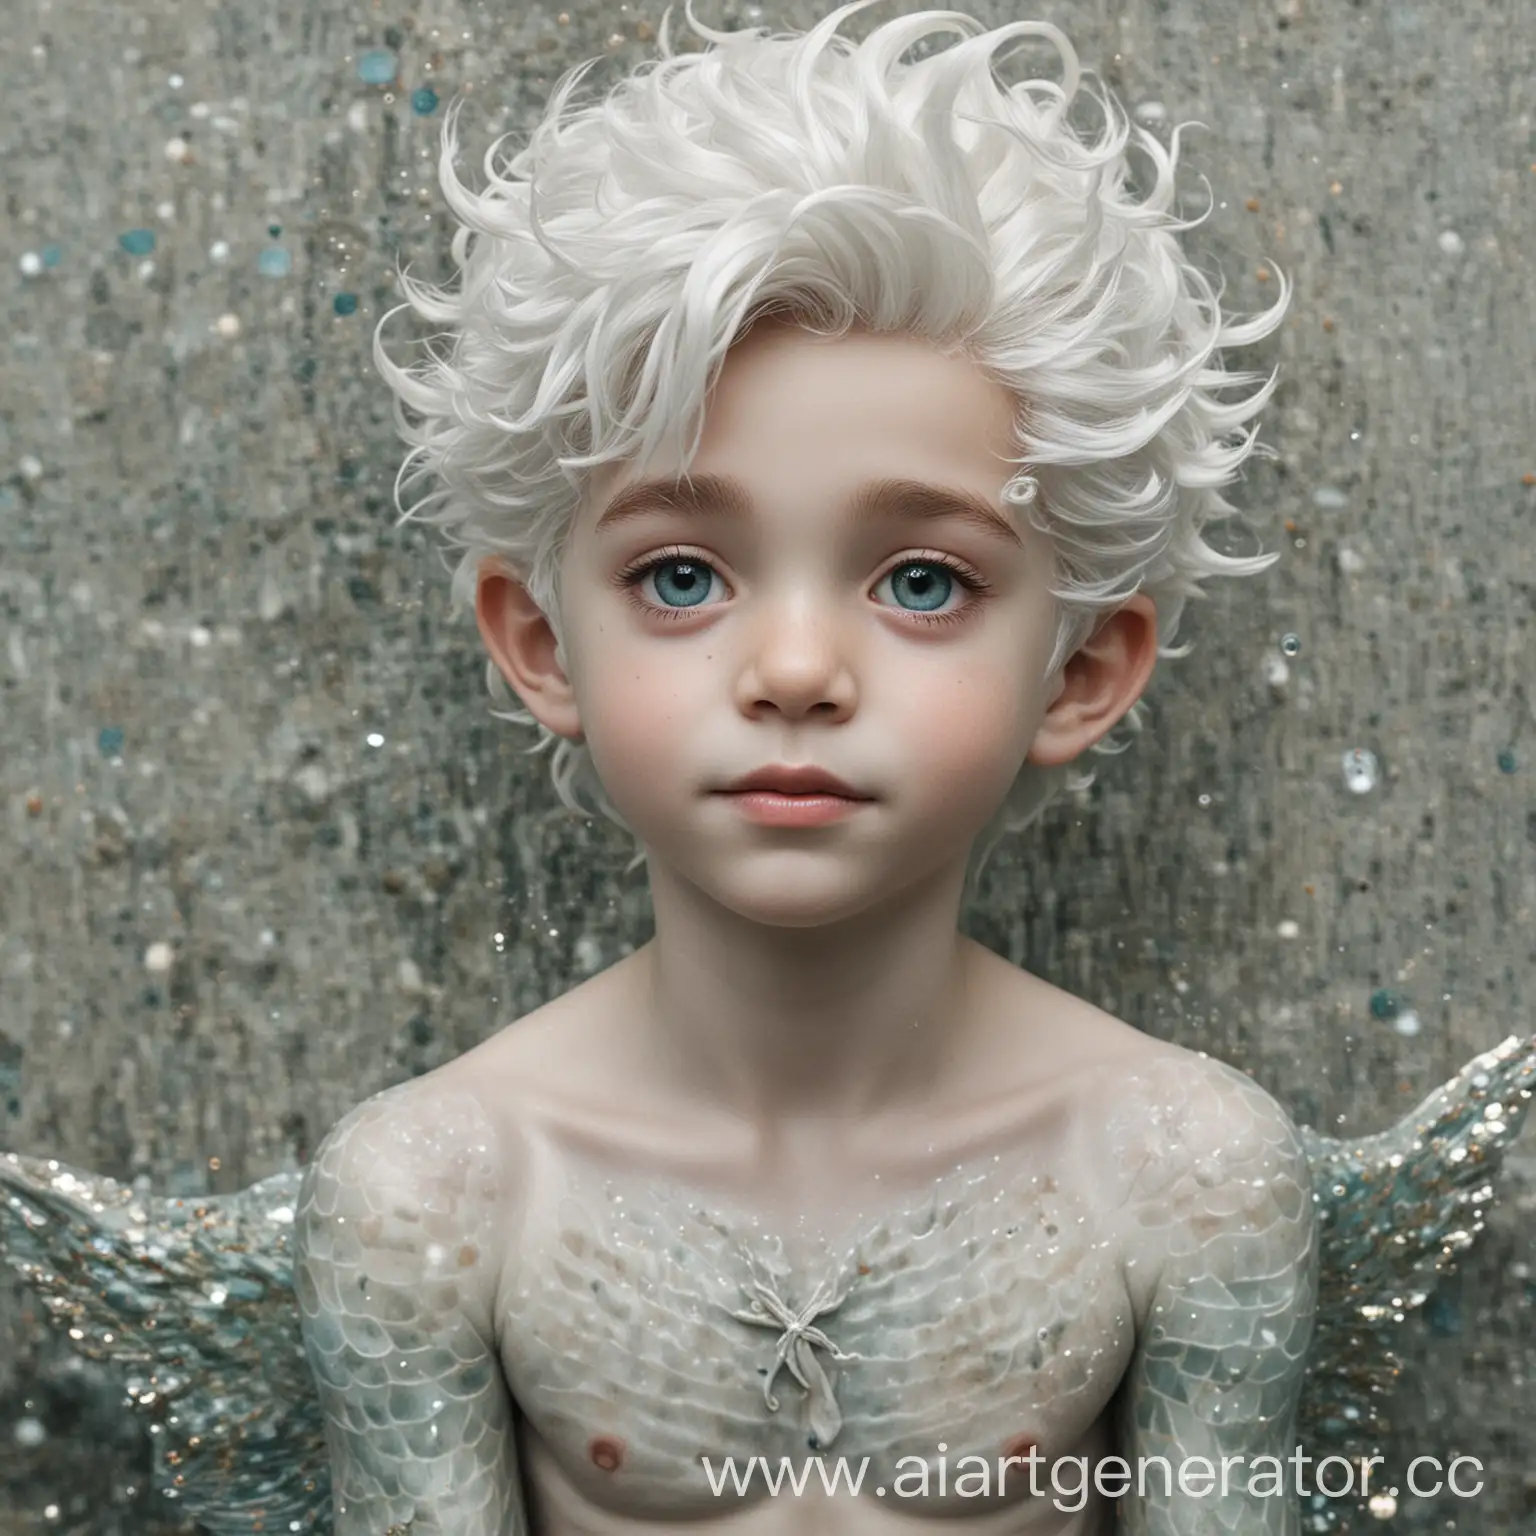 a little merman with white hair